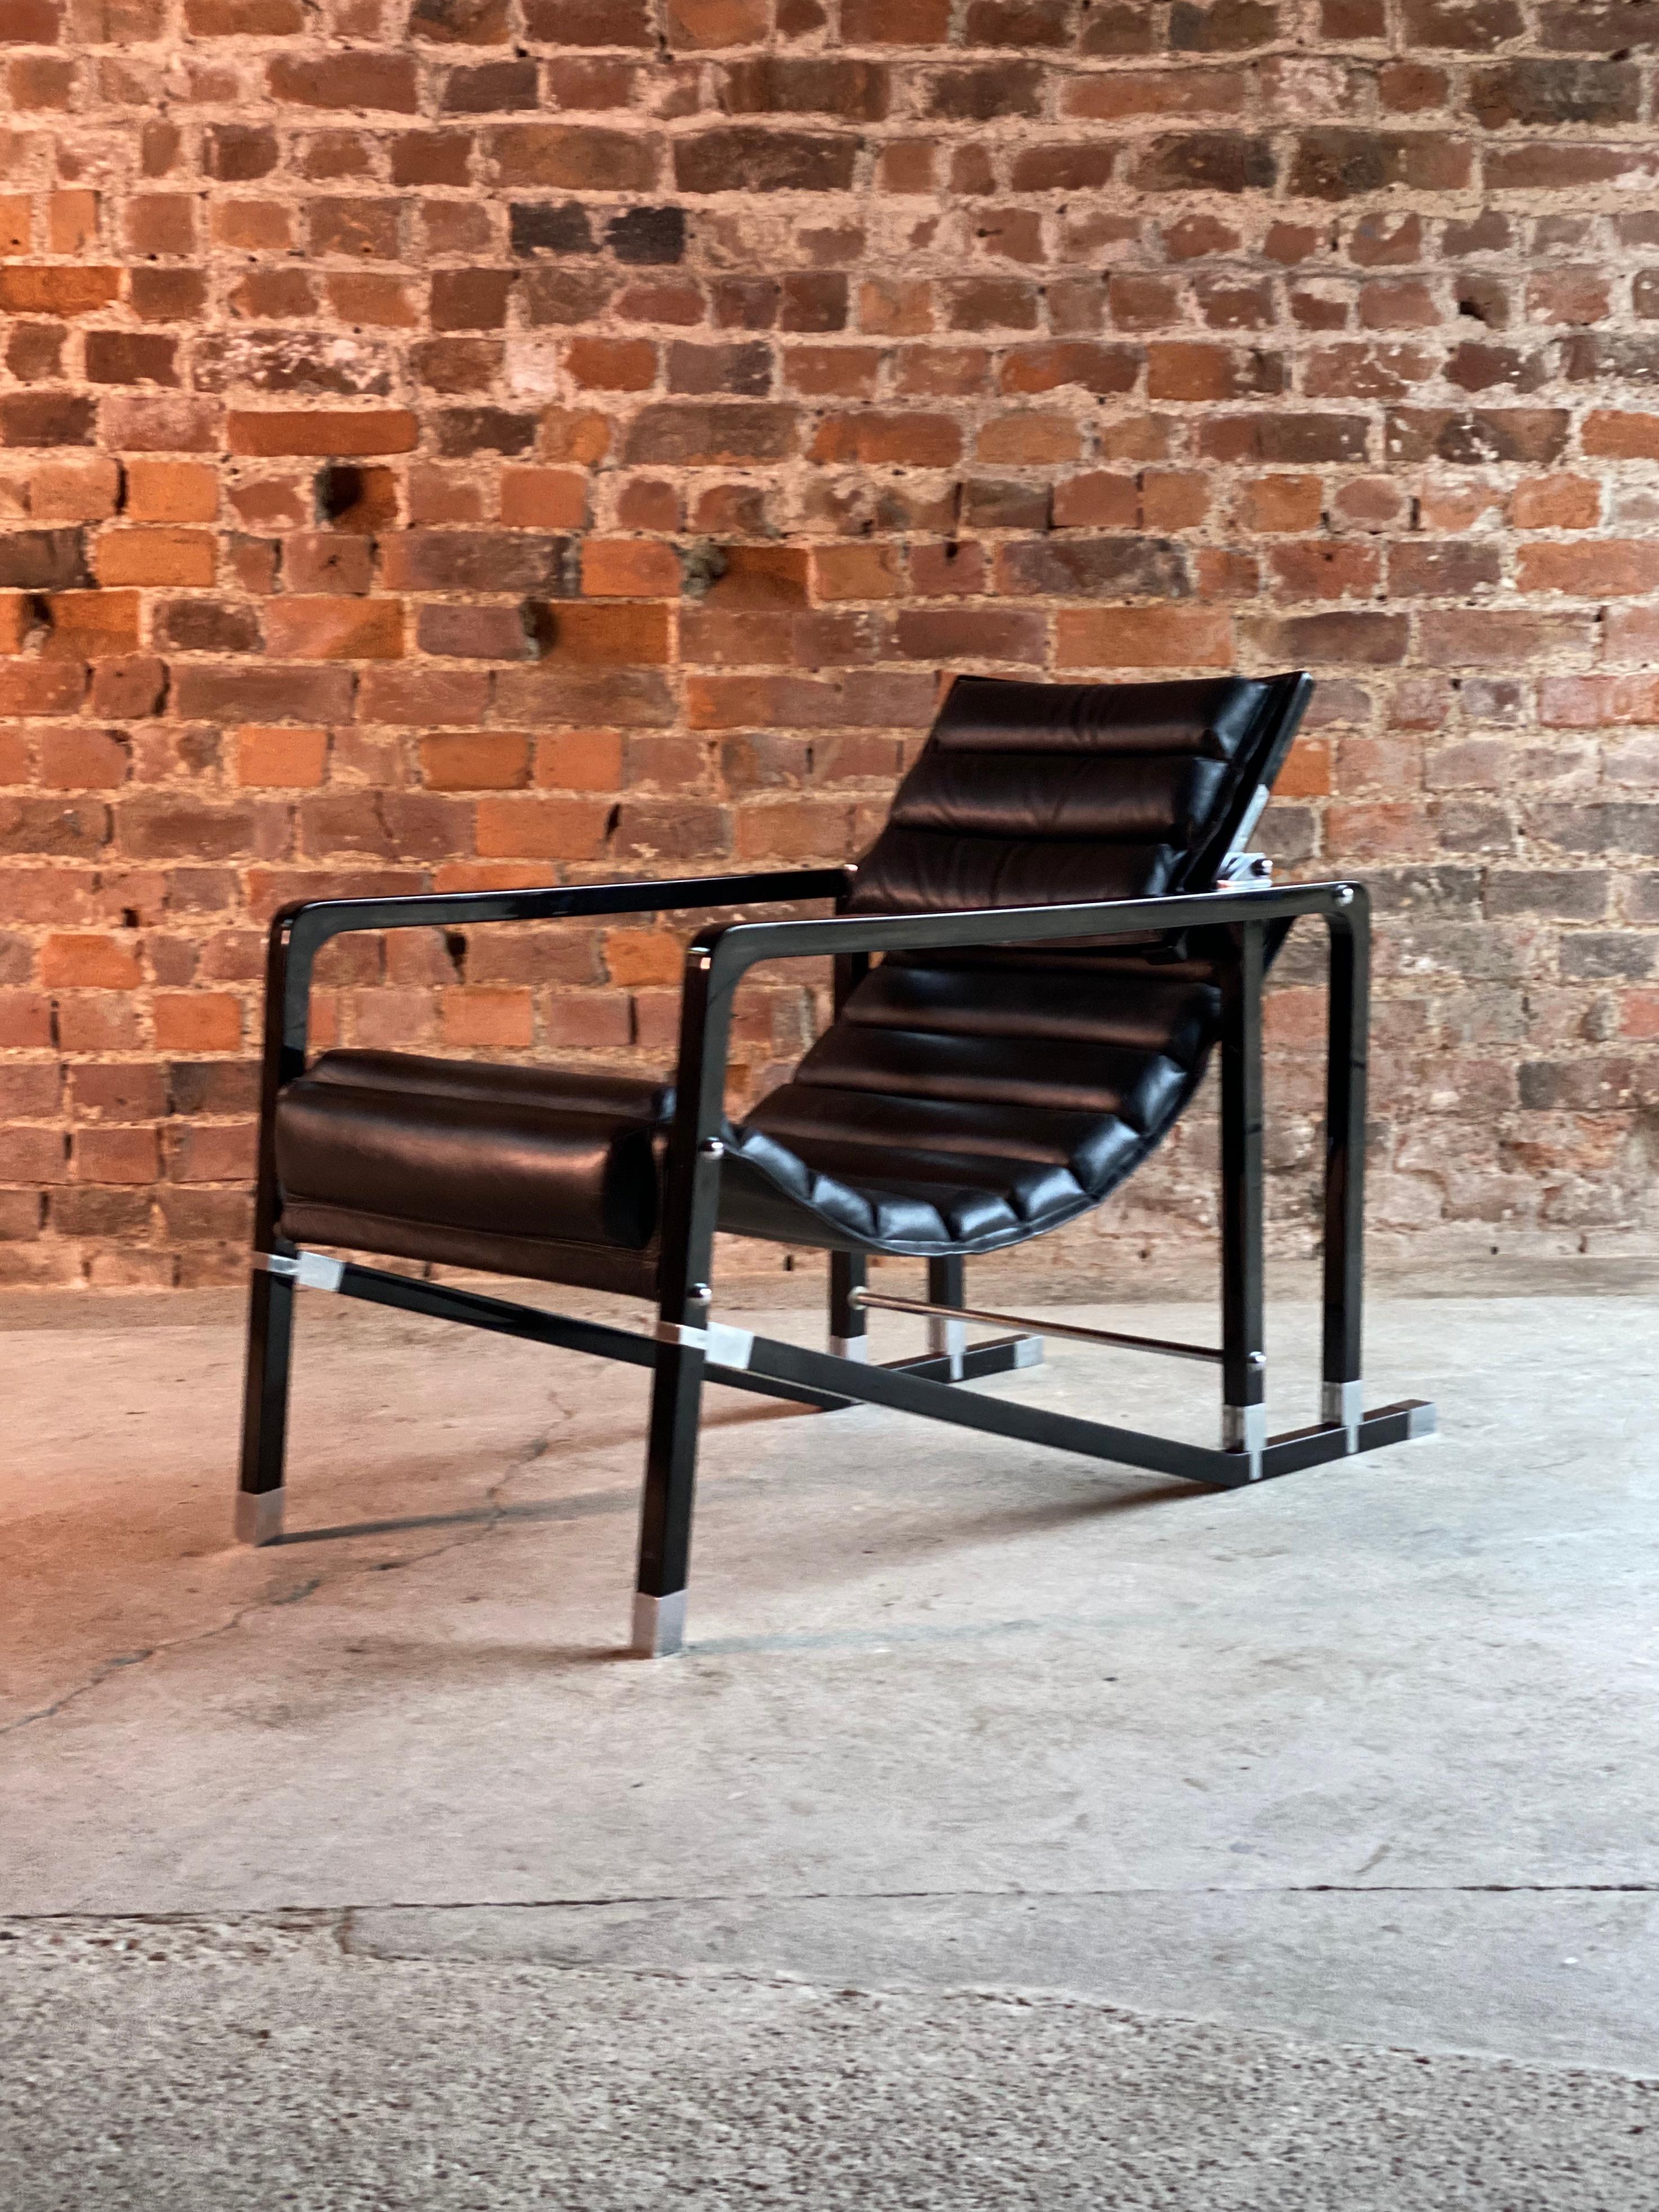 Bauhaus Eileen Gray Transat Chair in Black Leather Black Lacquer by Ecart, circa 2000